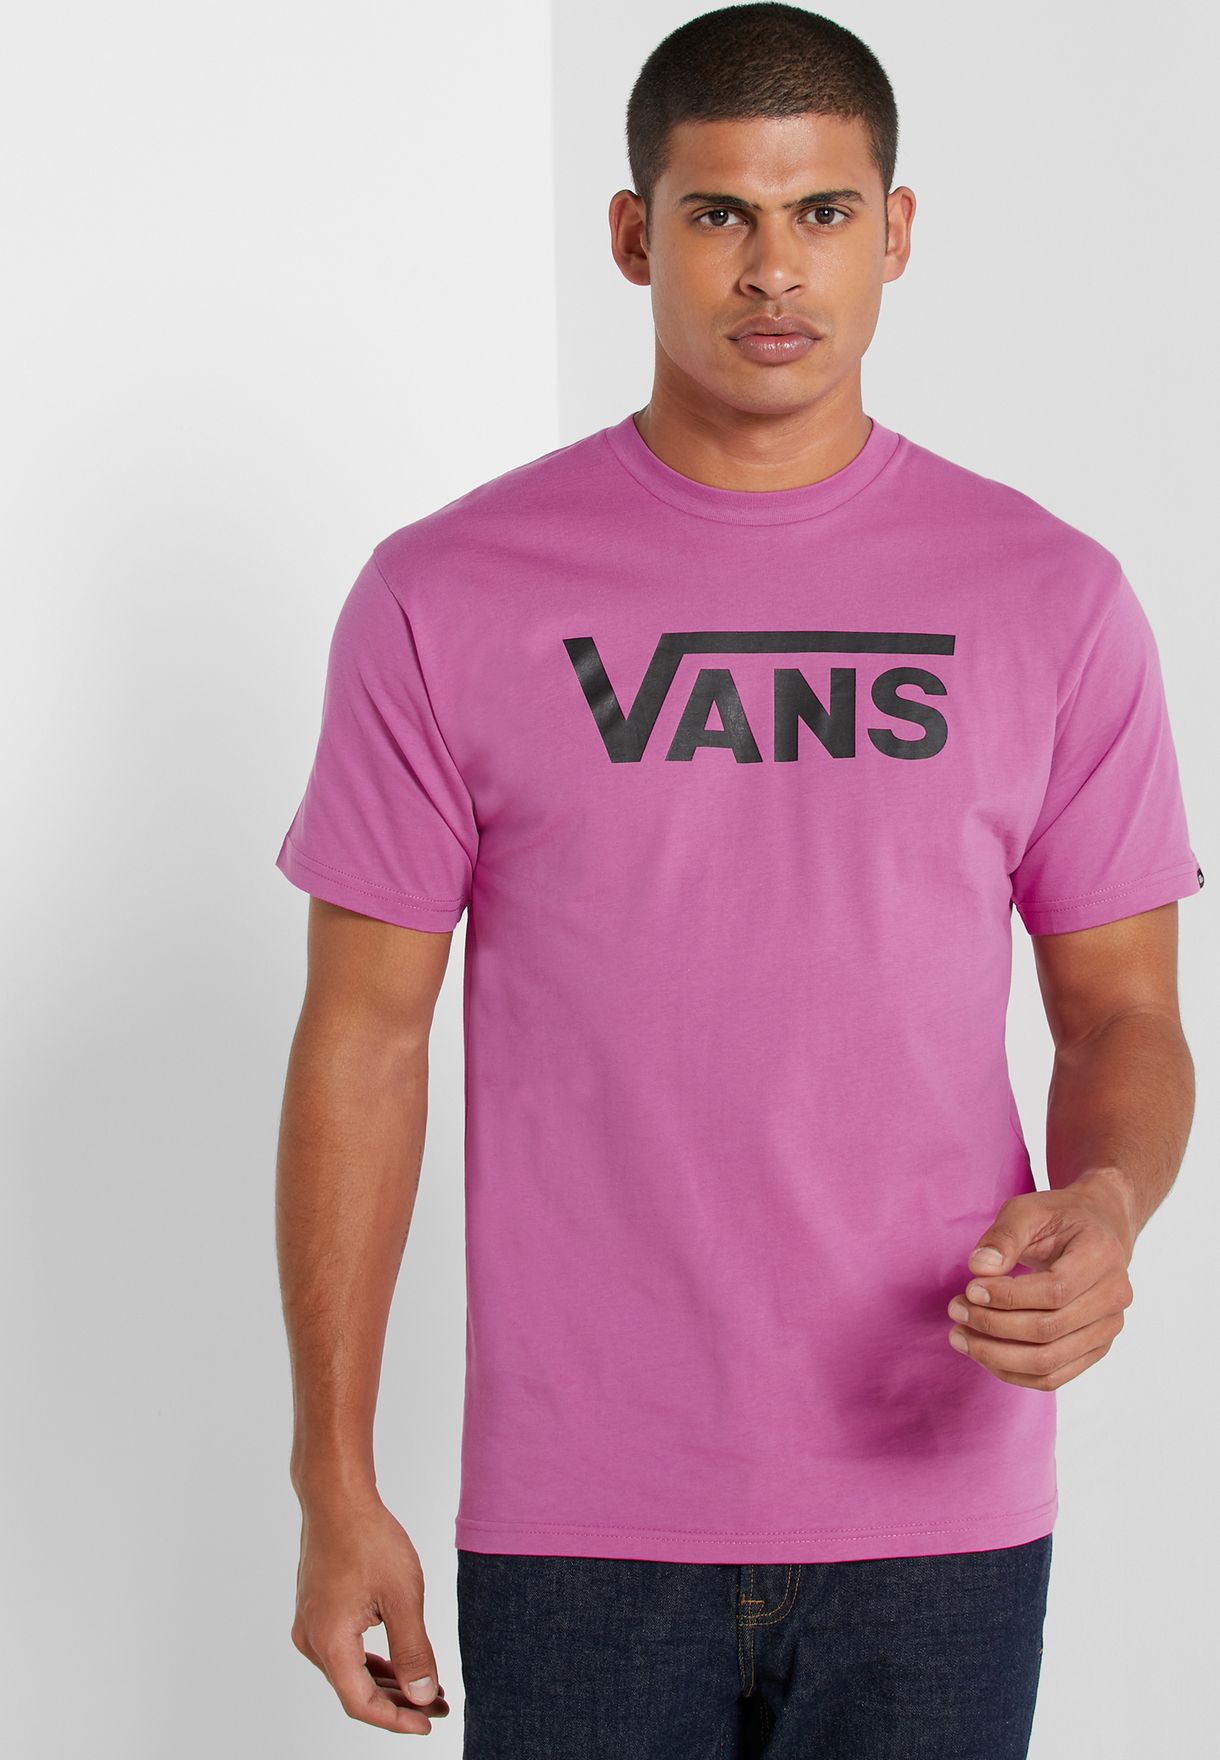 pink vans shirt mens 